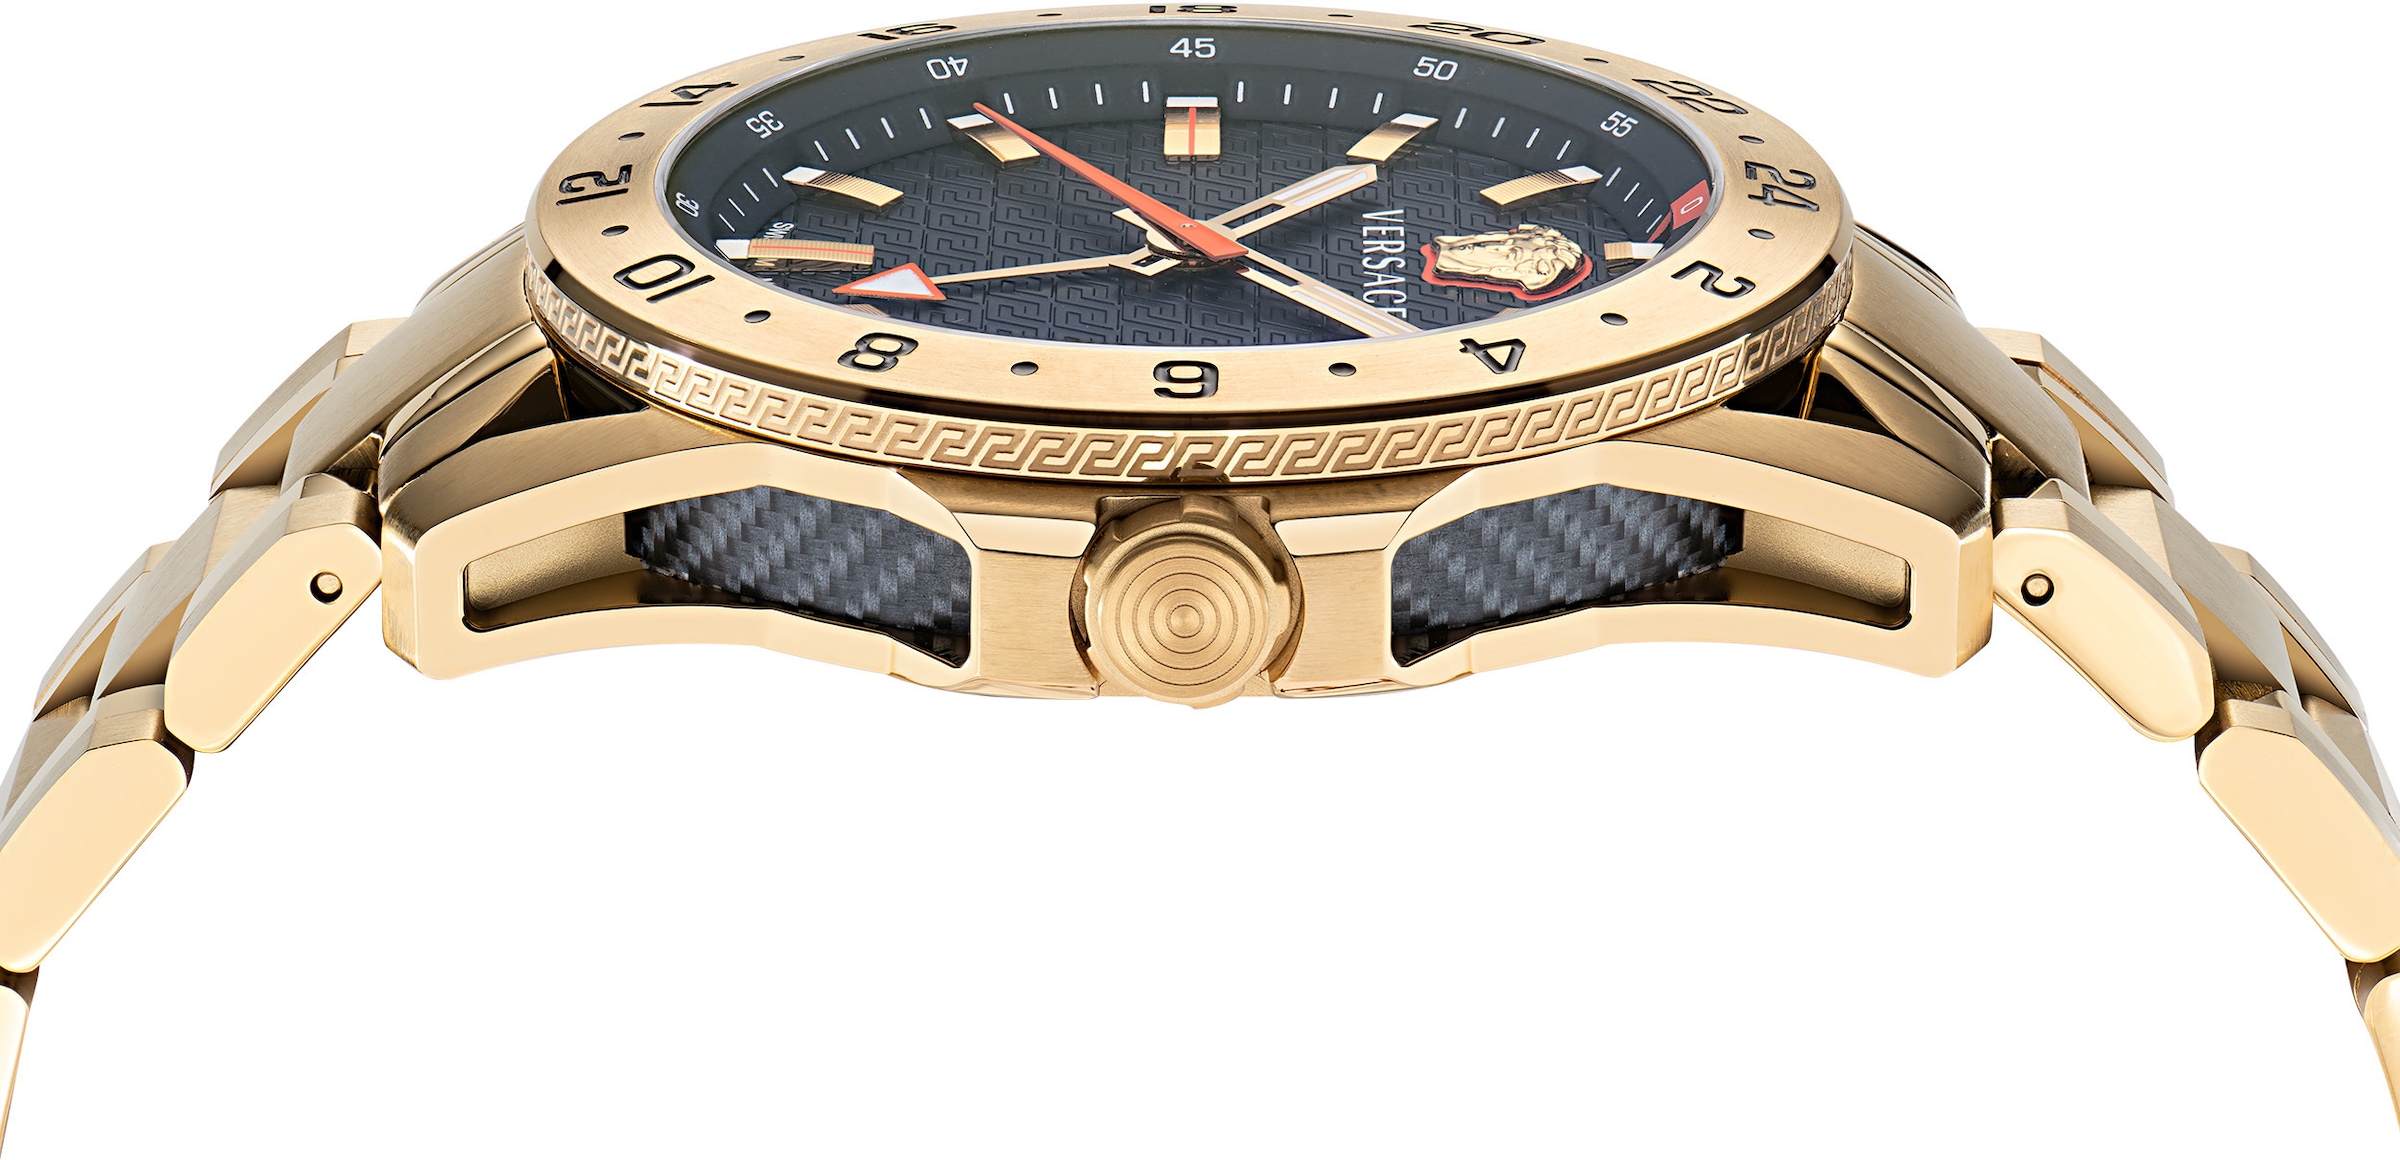 Versace Quarzuhr »SPORT TECH GMT, VE2W00522«, Armbanduhr, Herrenuhr, Saphirglas, Datum, Swiss Made